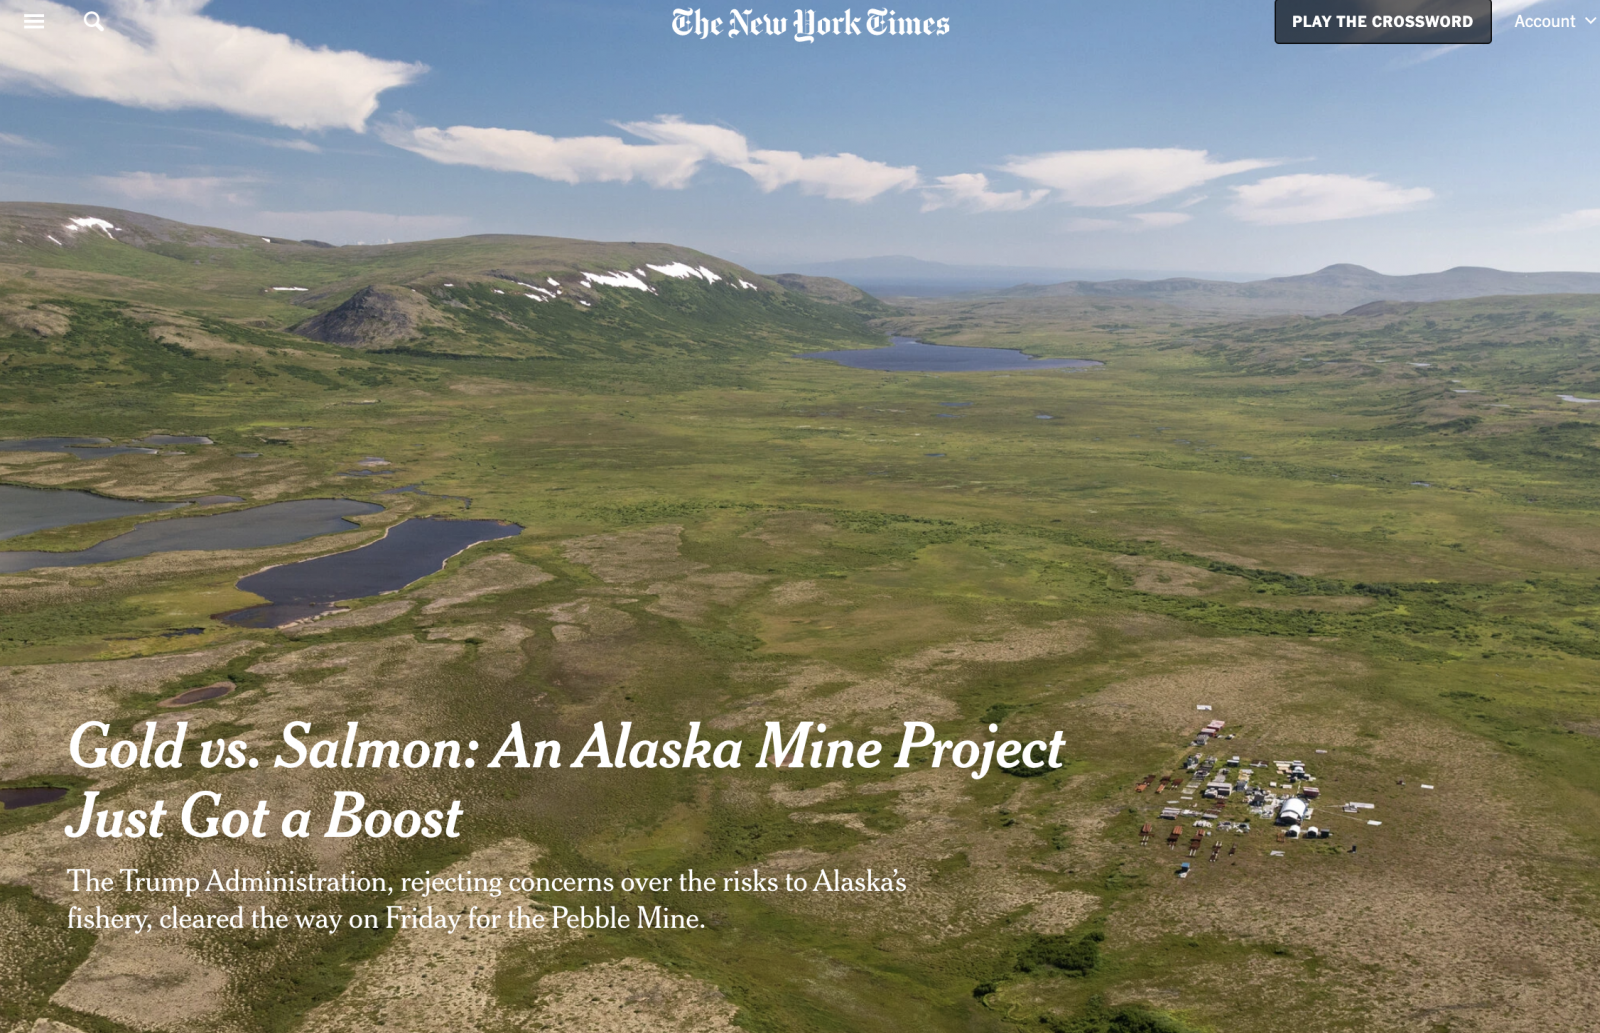 on NYTimes: Gold vs. Salmon: An Alaska Mine Project Just Got a Boost